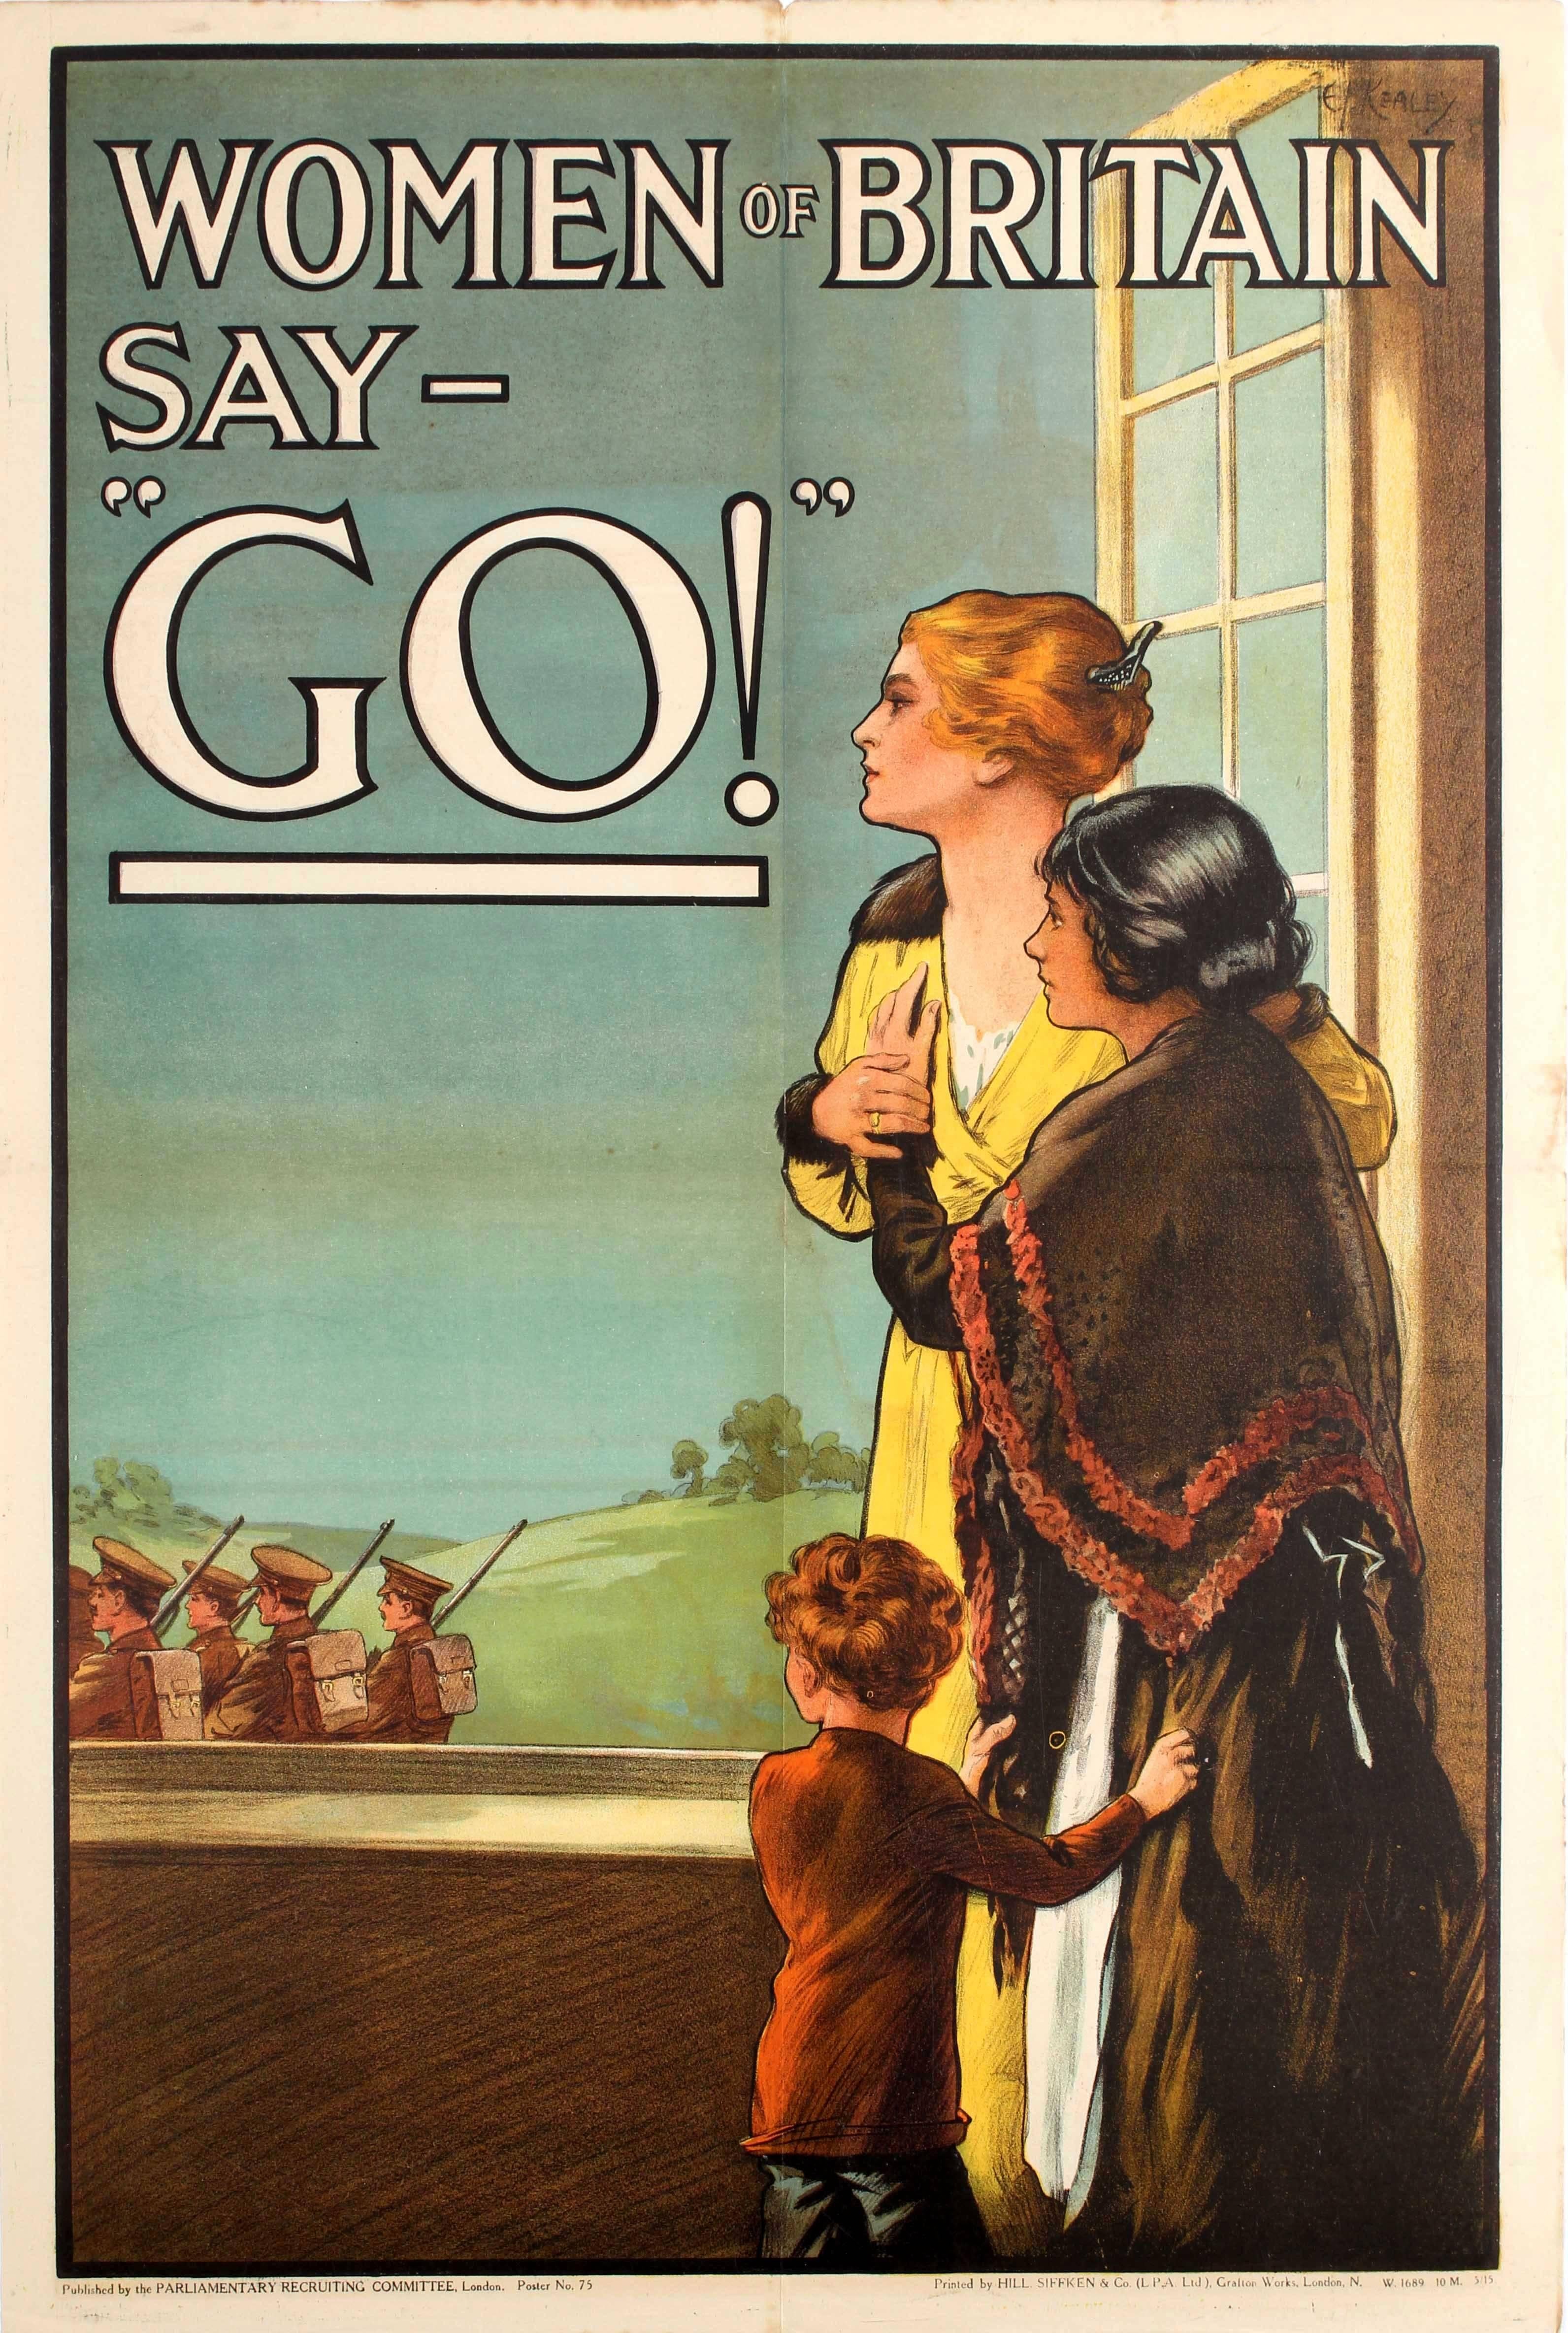 E.V. Kealey Print - Original Iconic World War One Propaganda Poster - Women Of Britain Say "Go!"